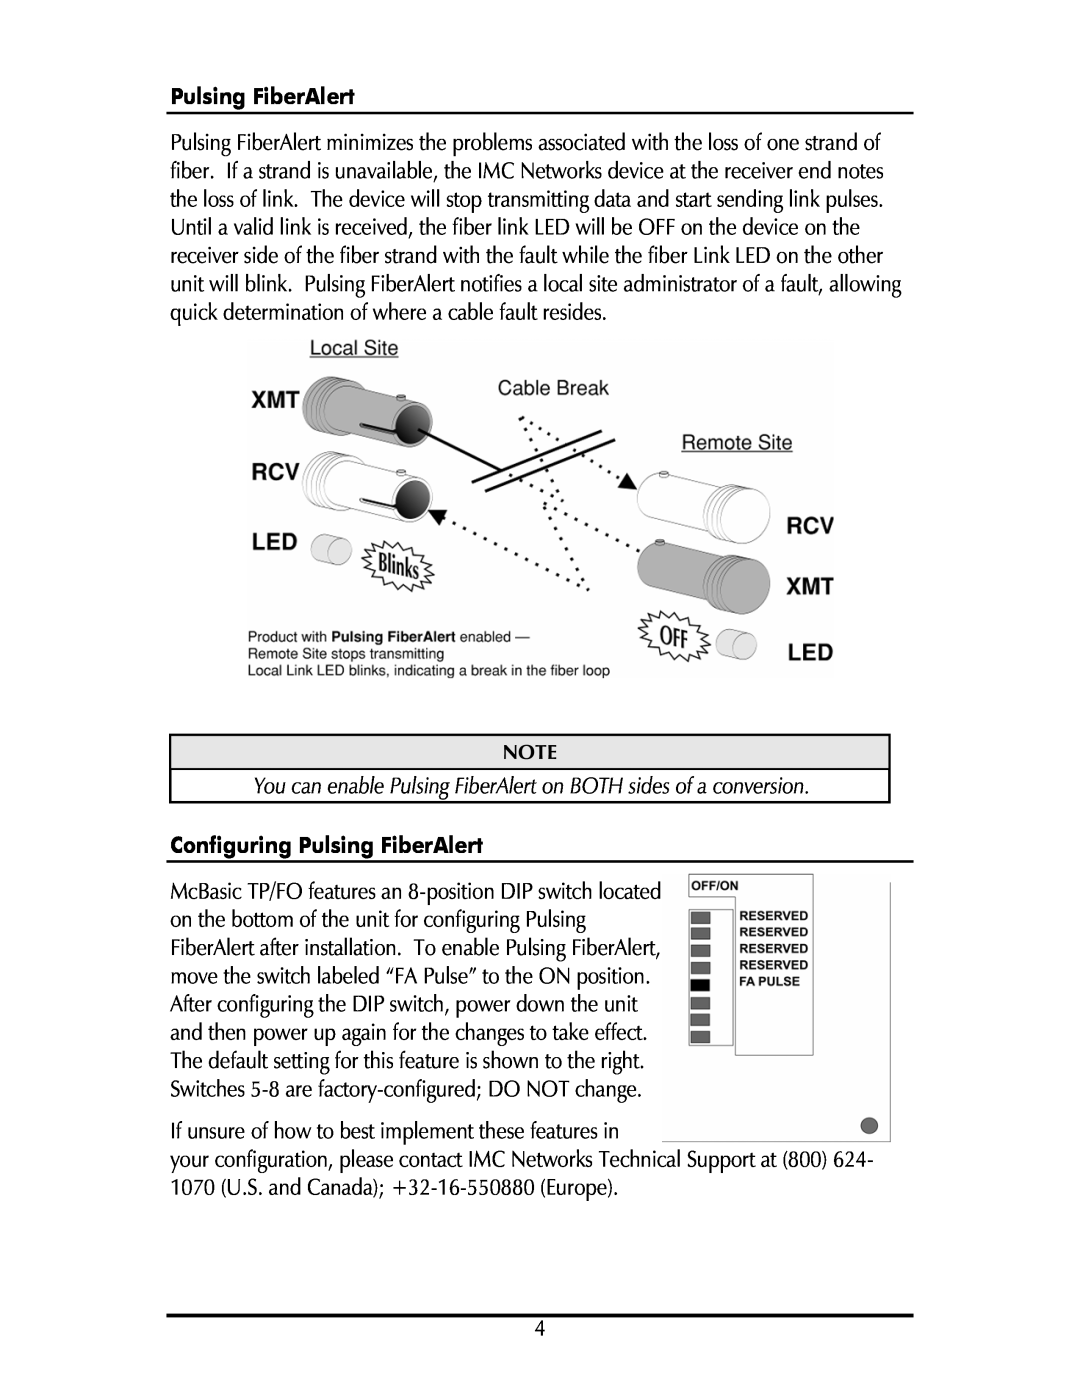 IMC Networks SP50 operation manual Configuring Pulsing FiberAlert 